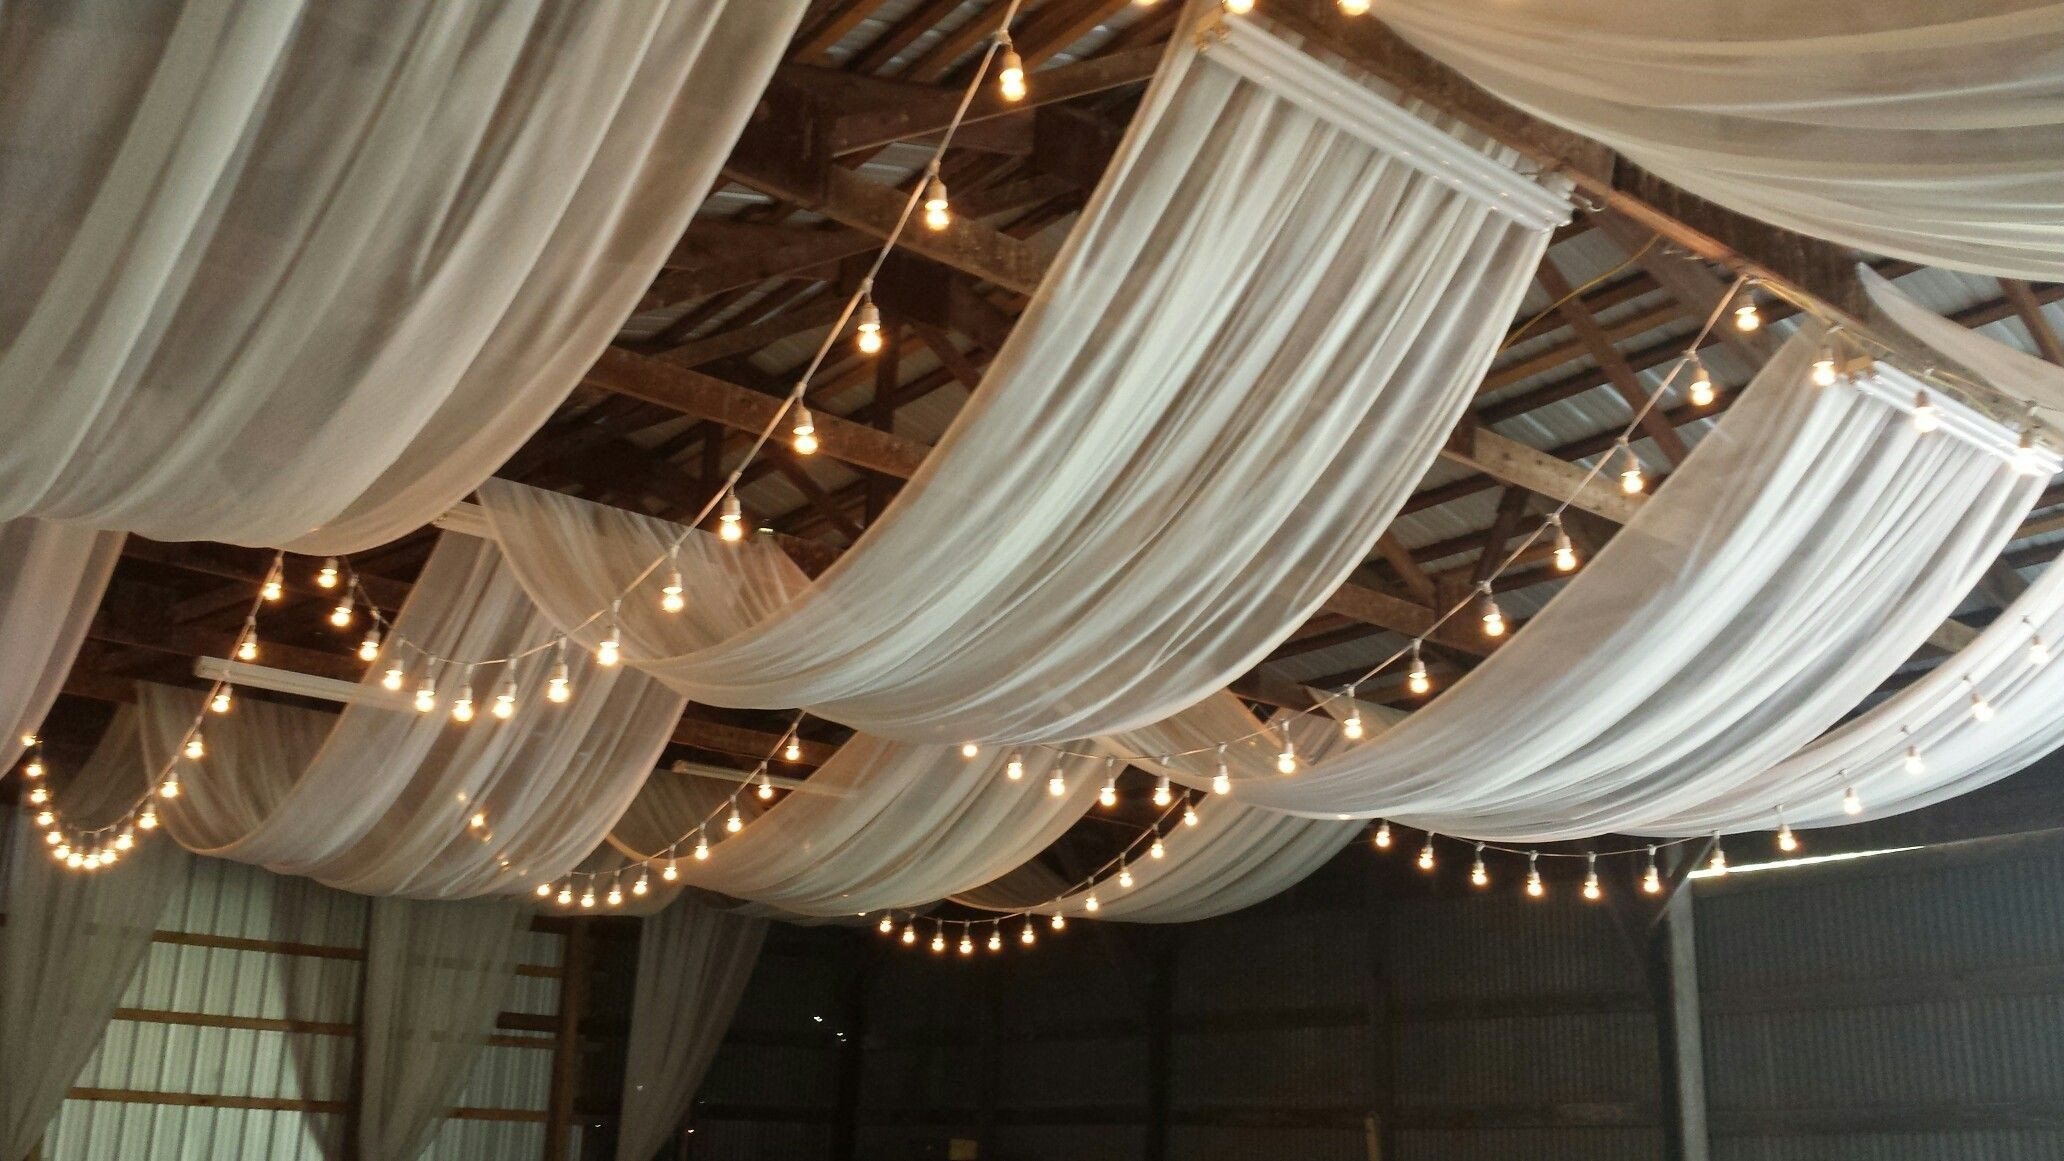 DIY Wedding Ceiling Drapery
 Ceiling Decoration Ideas for A Party Elegant Ivory Ceiling